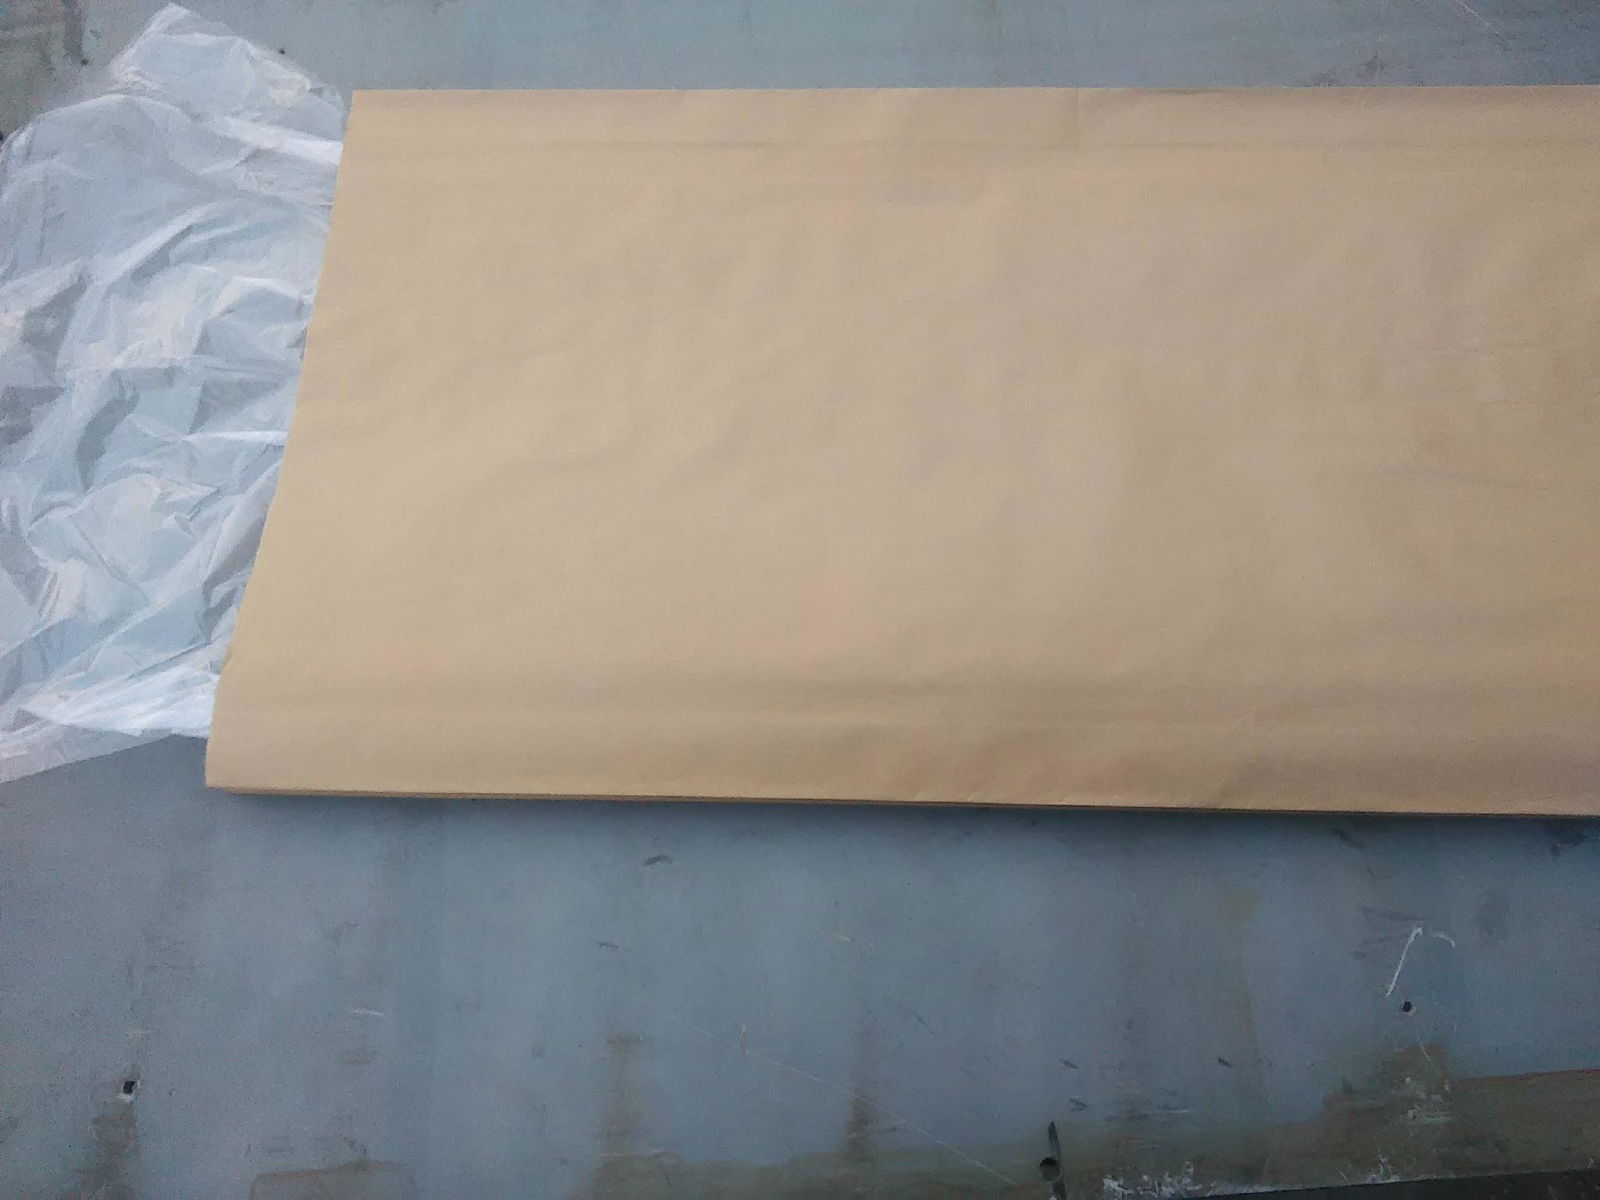 fish paper bags 105*41cm 160g export to Russia，korea 4